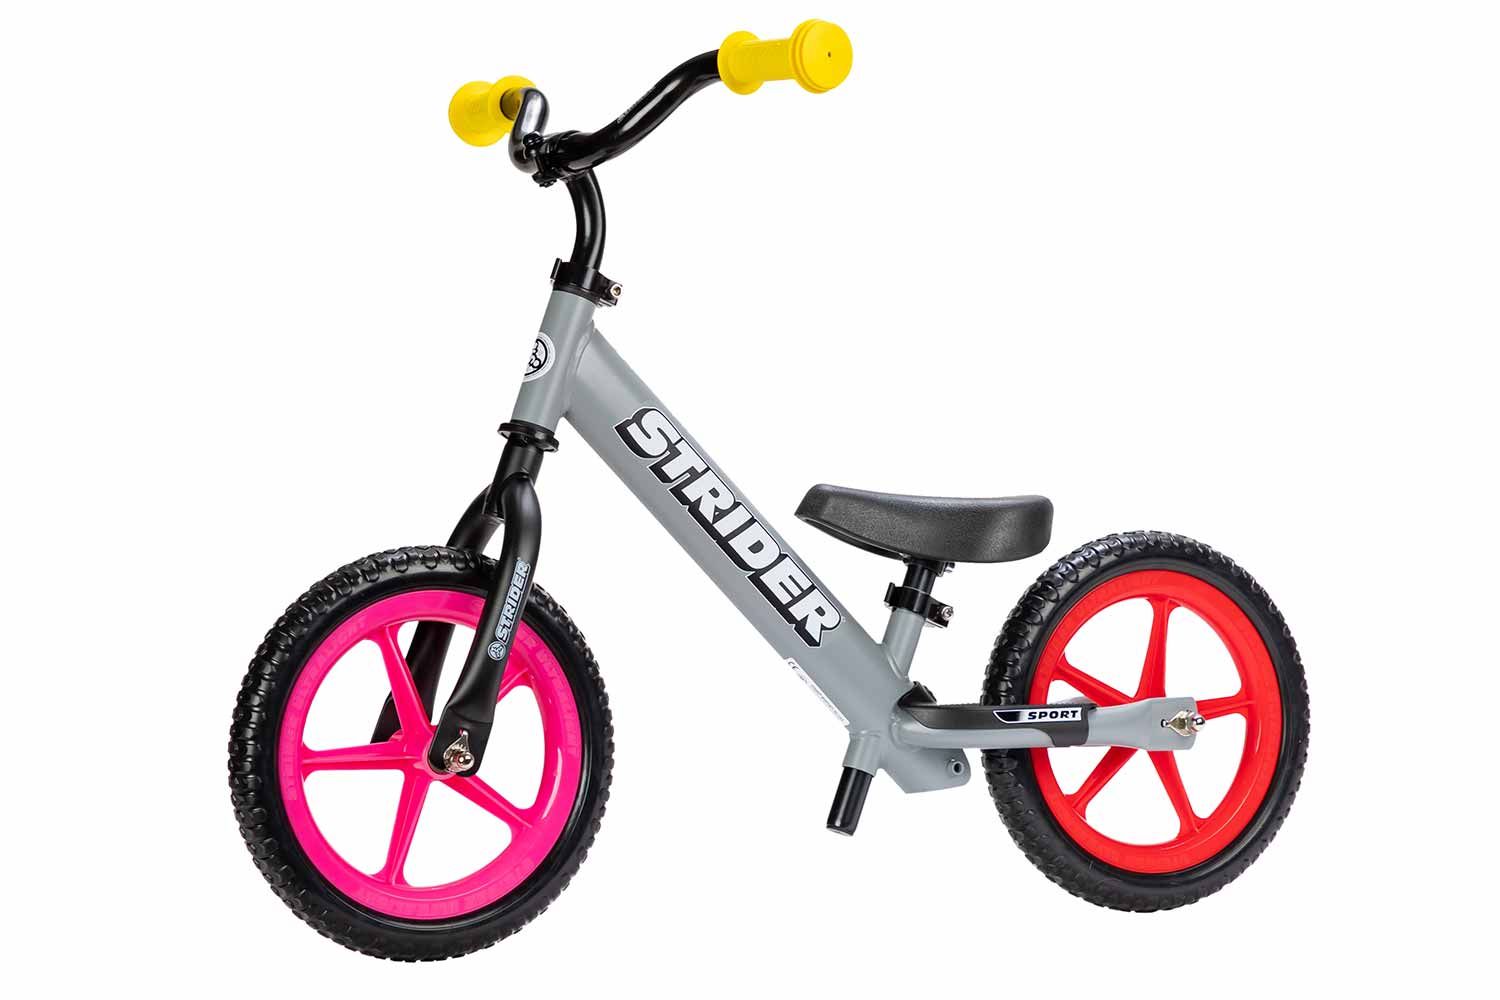 Color Run Strider Custom Build featuring Matte Gray Strider 12 Sport Balance Bike and colored Strider accessories